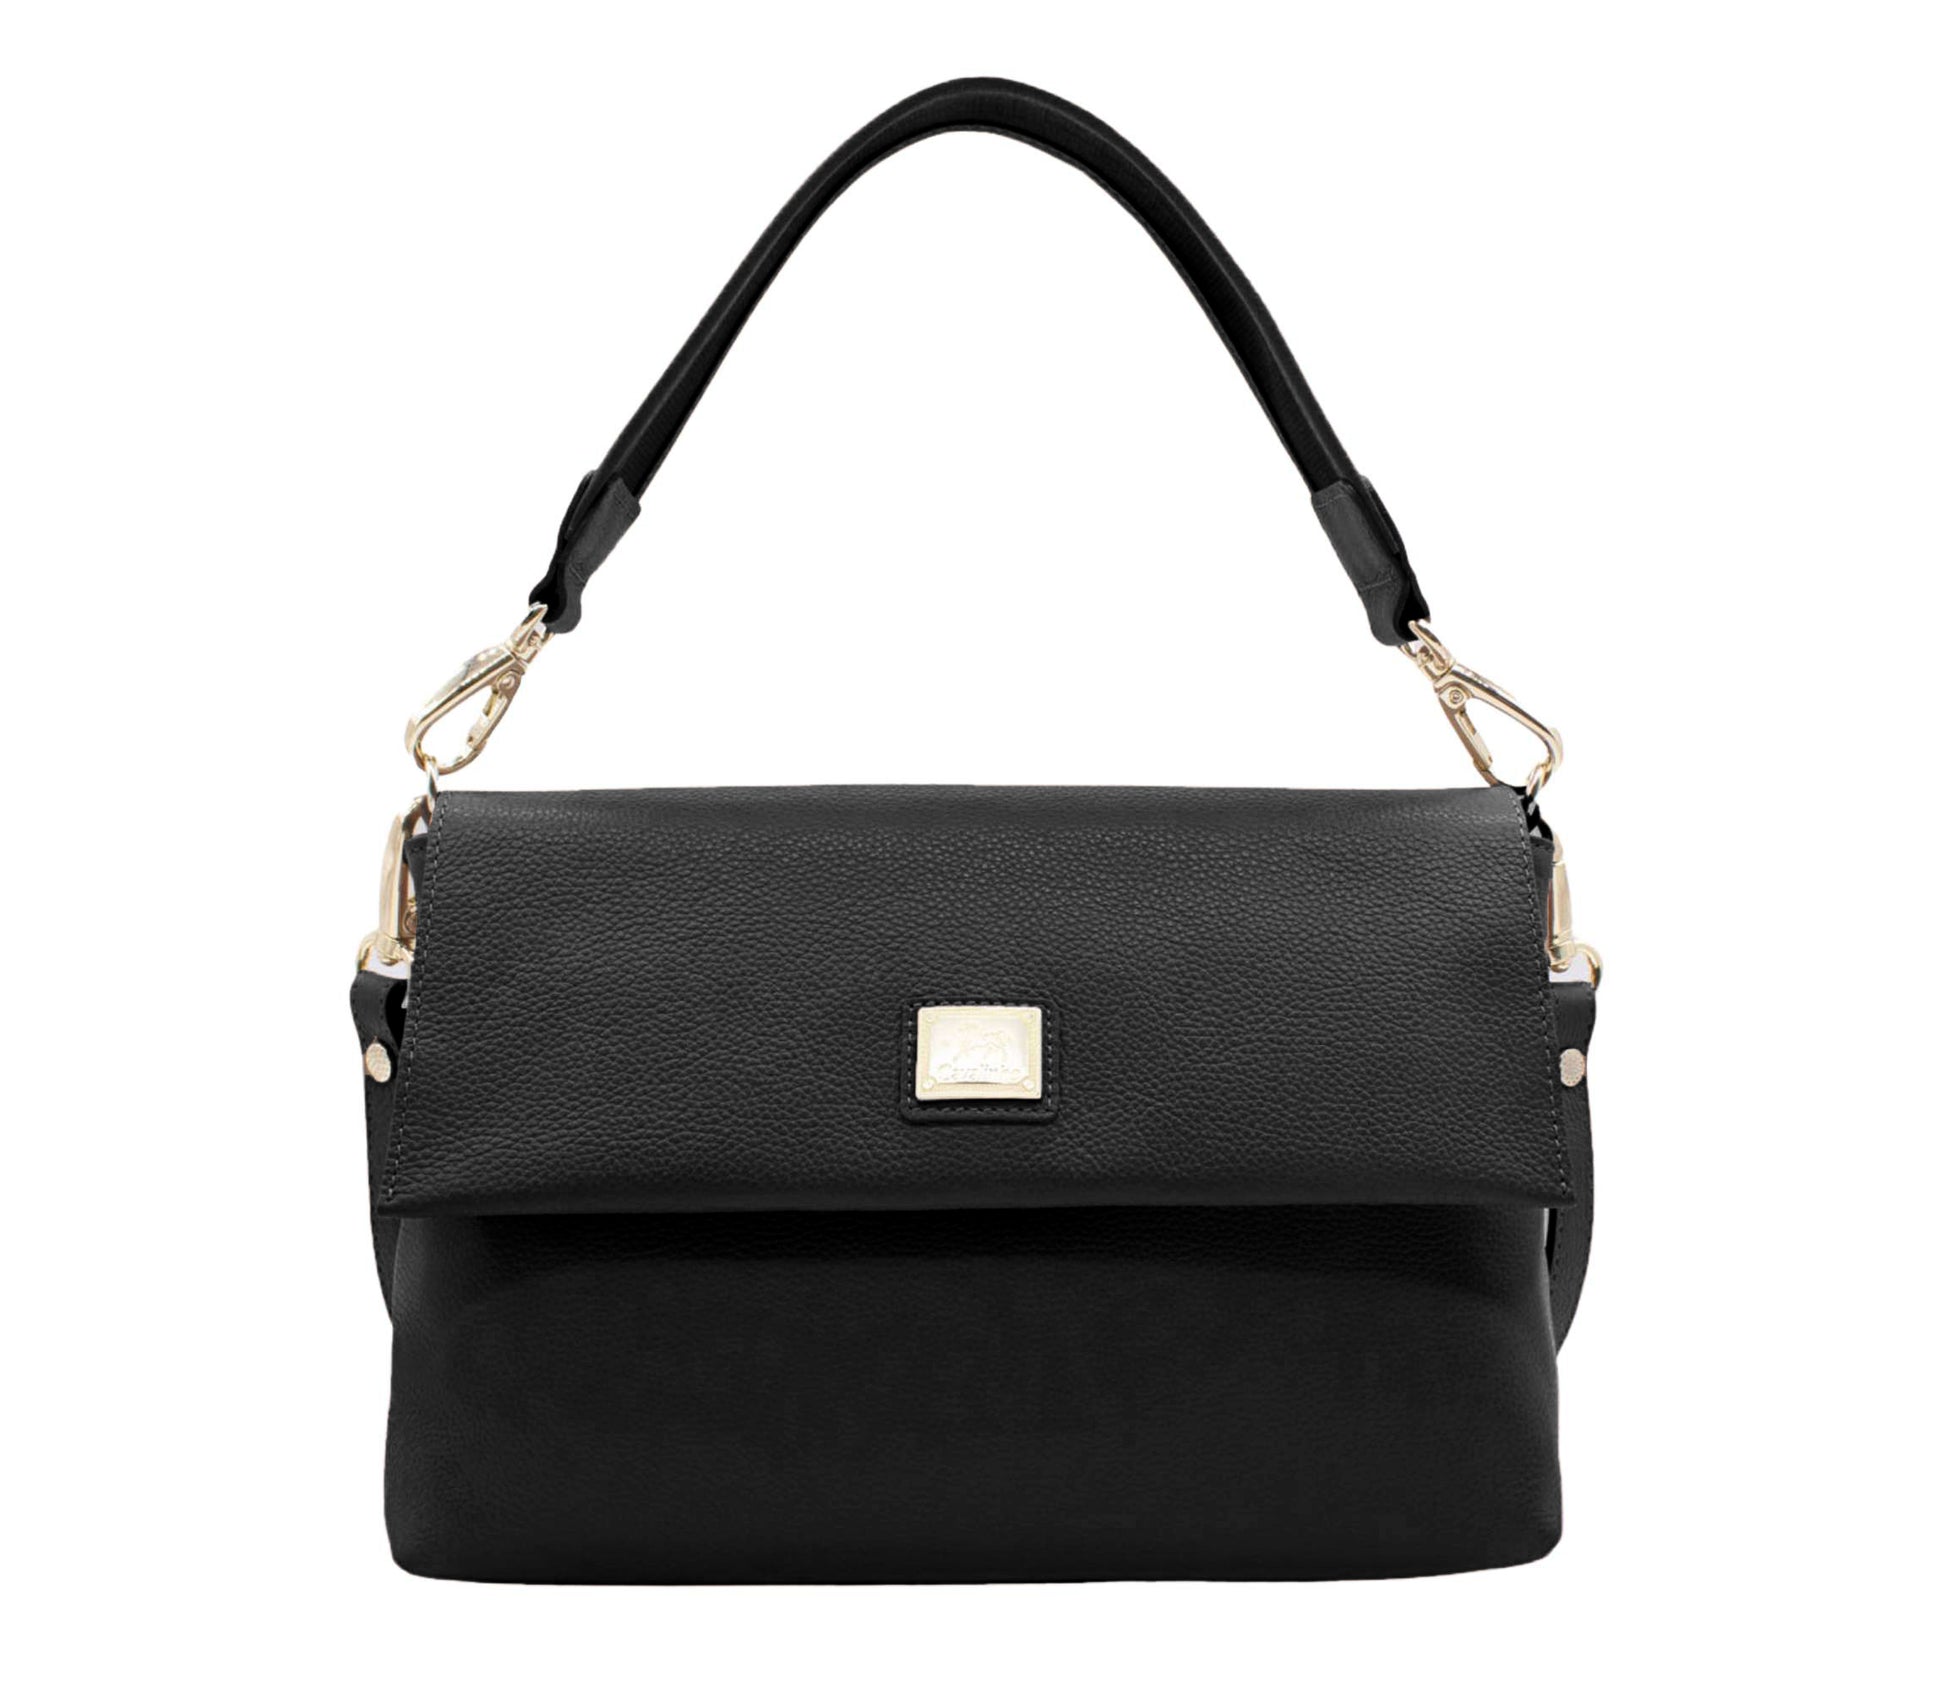 #color_ Black | Cavalinho Muse 3 in 1: Leather Clutch, Handbag or Crossbody Bag - Black - 18300509.01.99_1